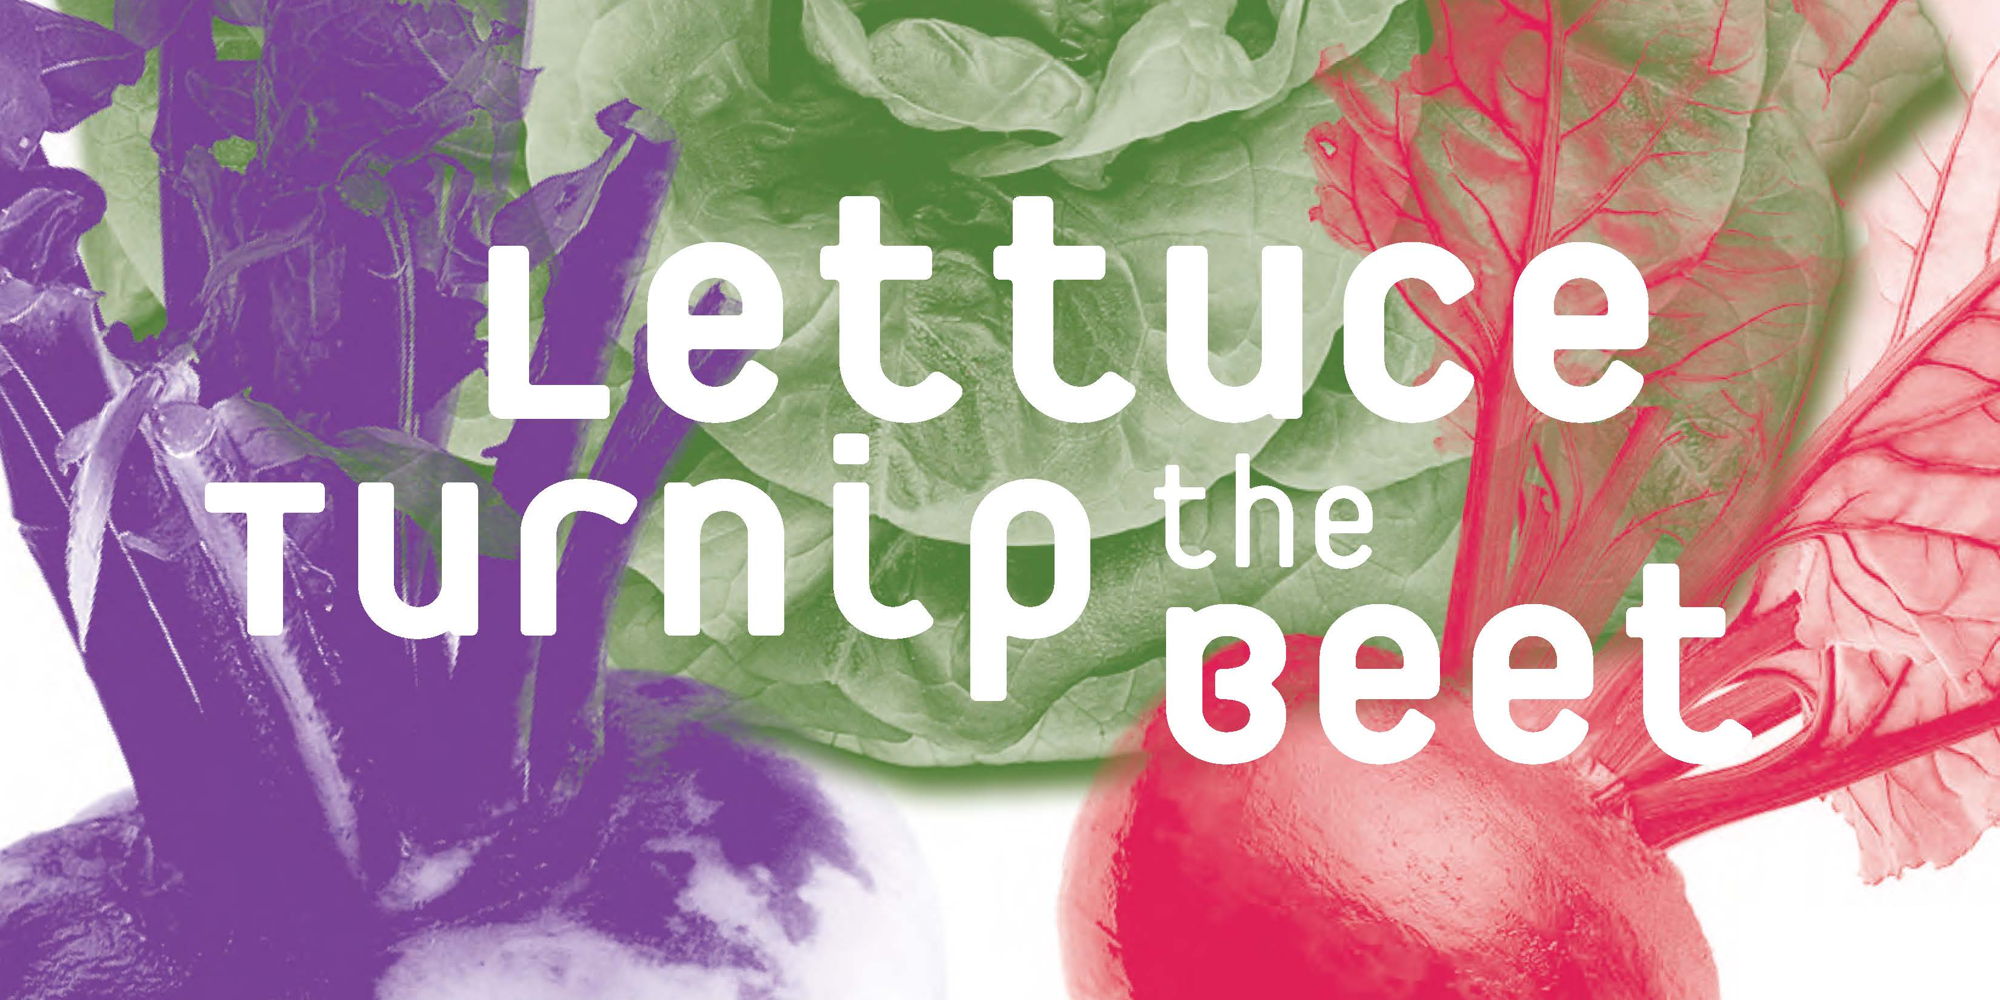 Lettuce Turnip the Beet promotional image